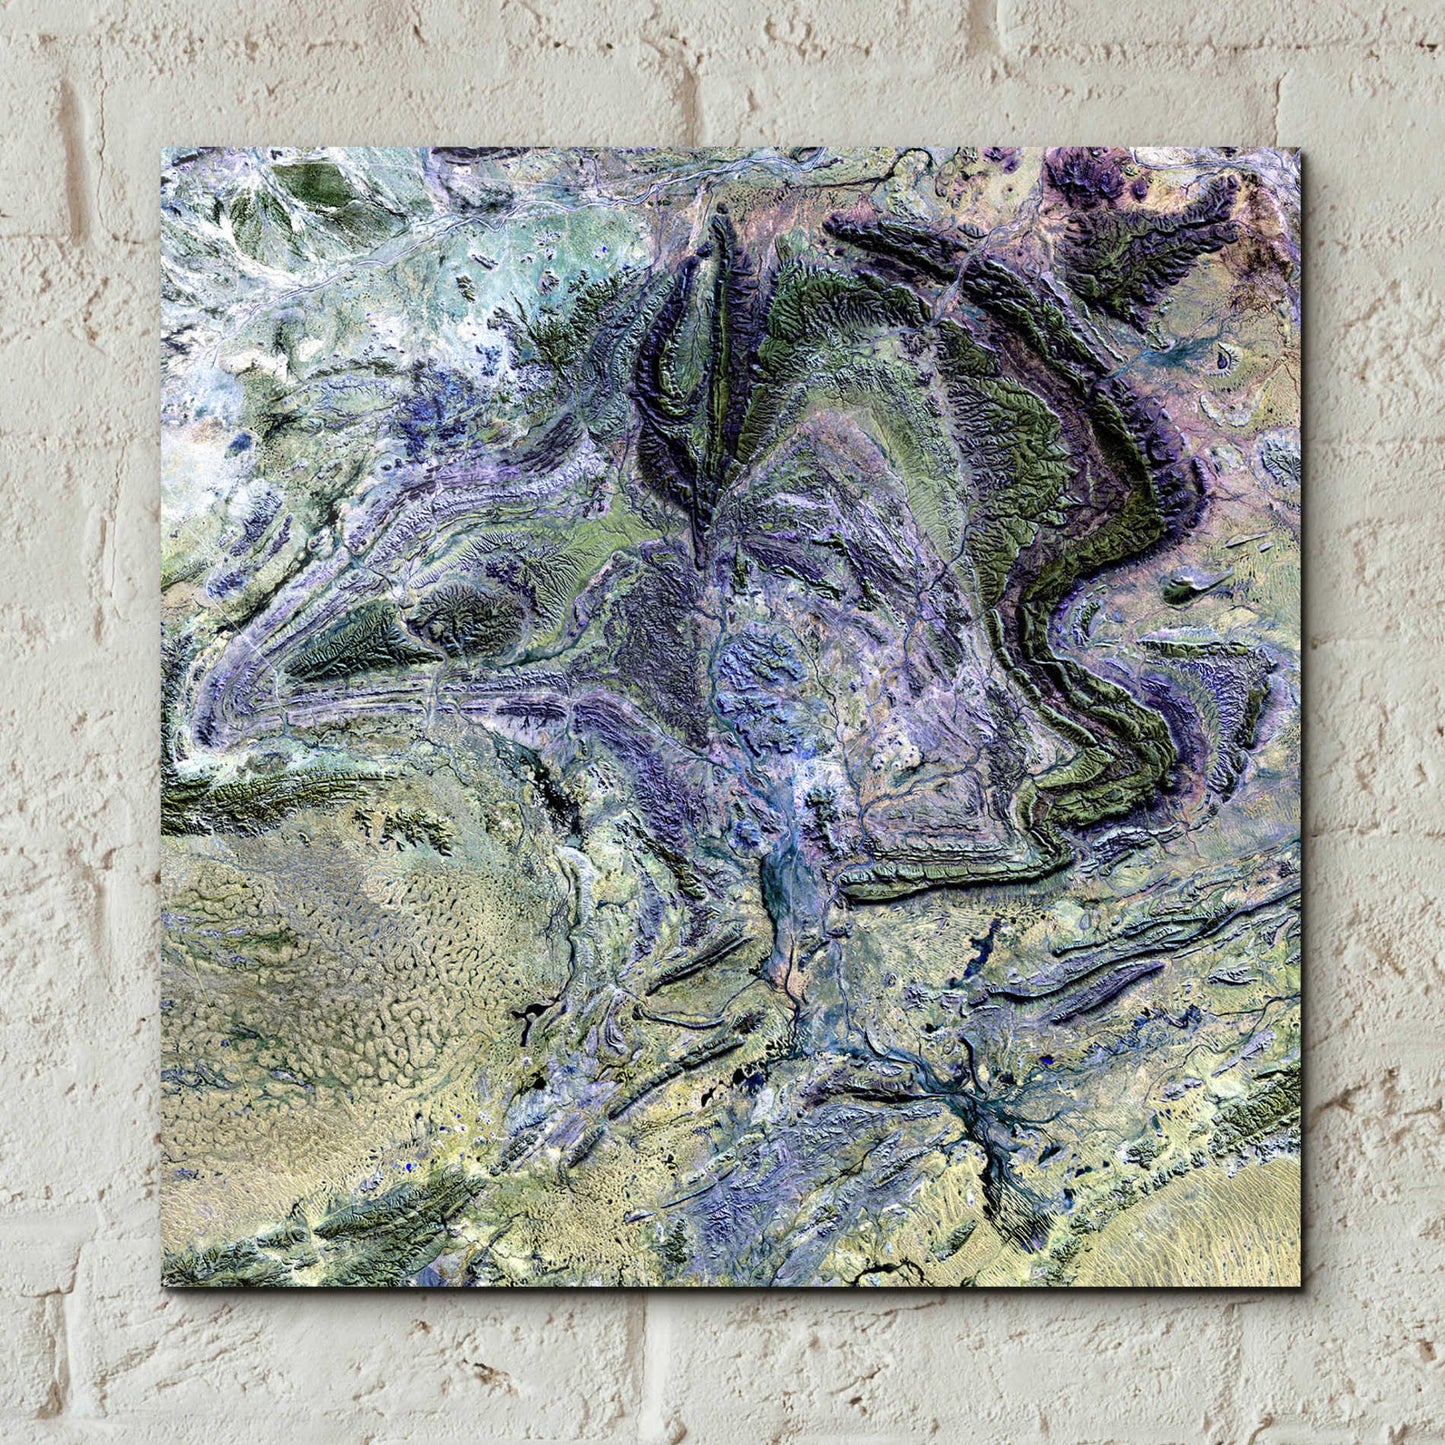 Epic Art 'Earth as Art: MacDonnel Ranges' Acrylic Glass Wall Art,12x12